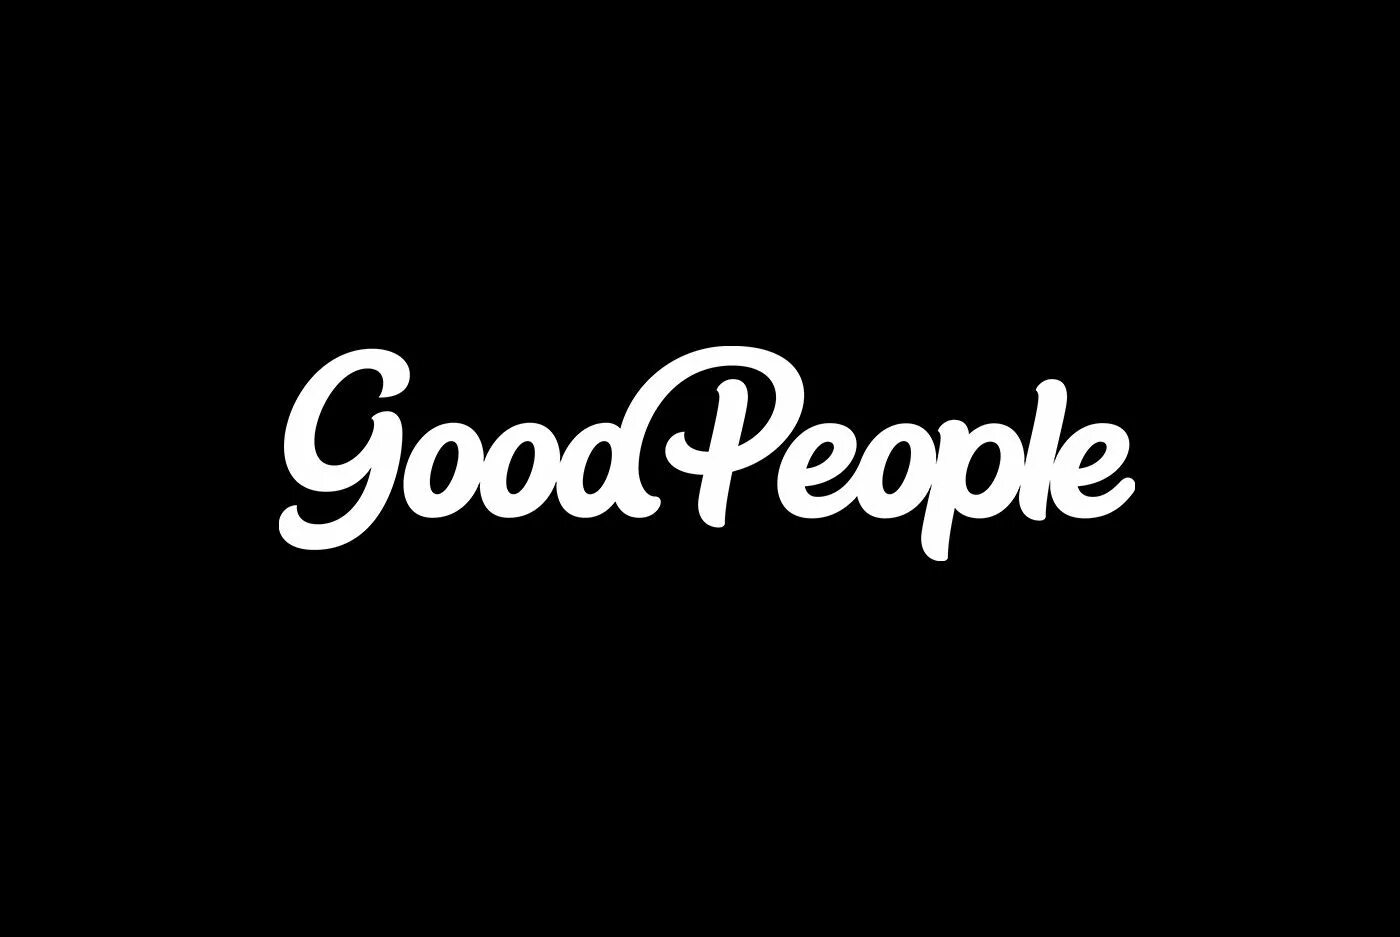 People script. Good people. Logo people good. Портфолио лого текстом. Студия good people.